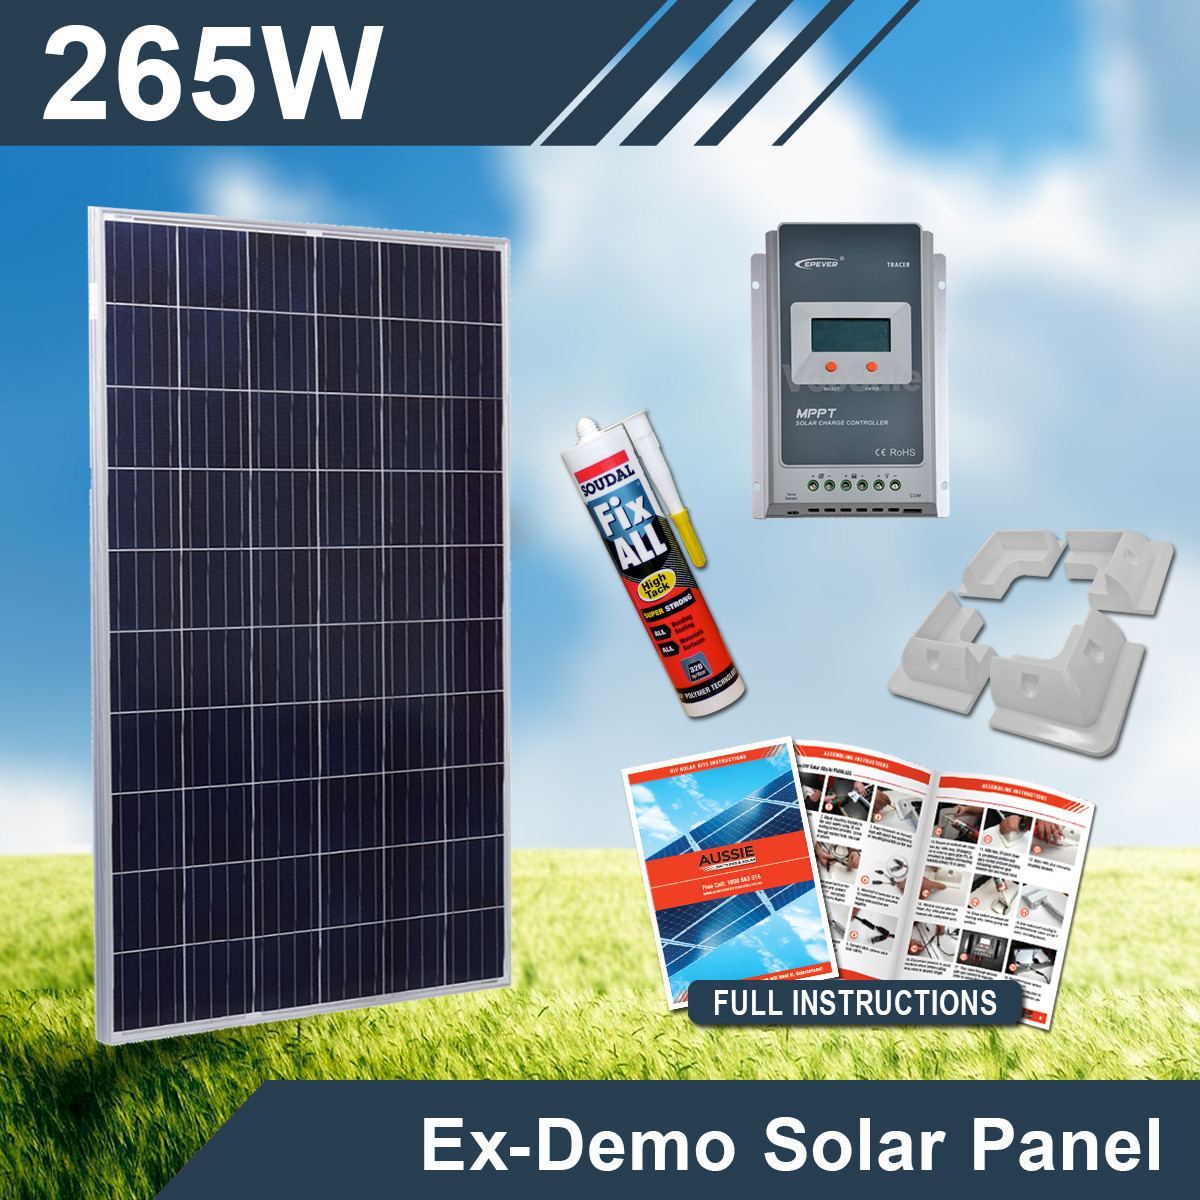 Best ideas about DIY Solar Kits
. Save or Pin 265W 12V Ex Demo plete DIY Solar Kit Now.